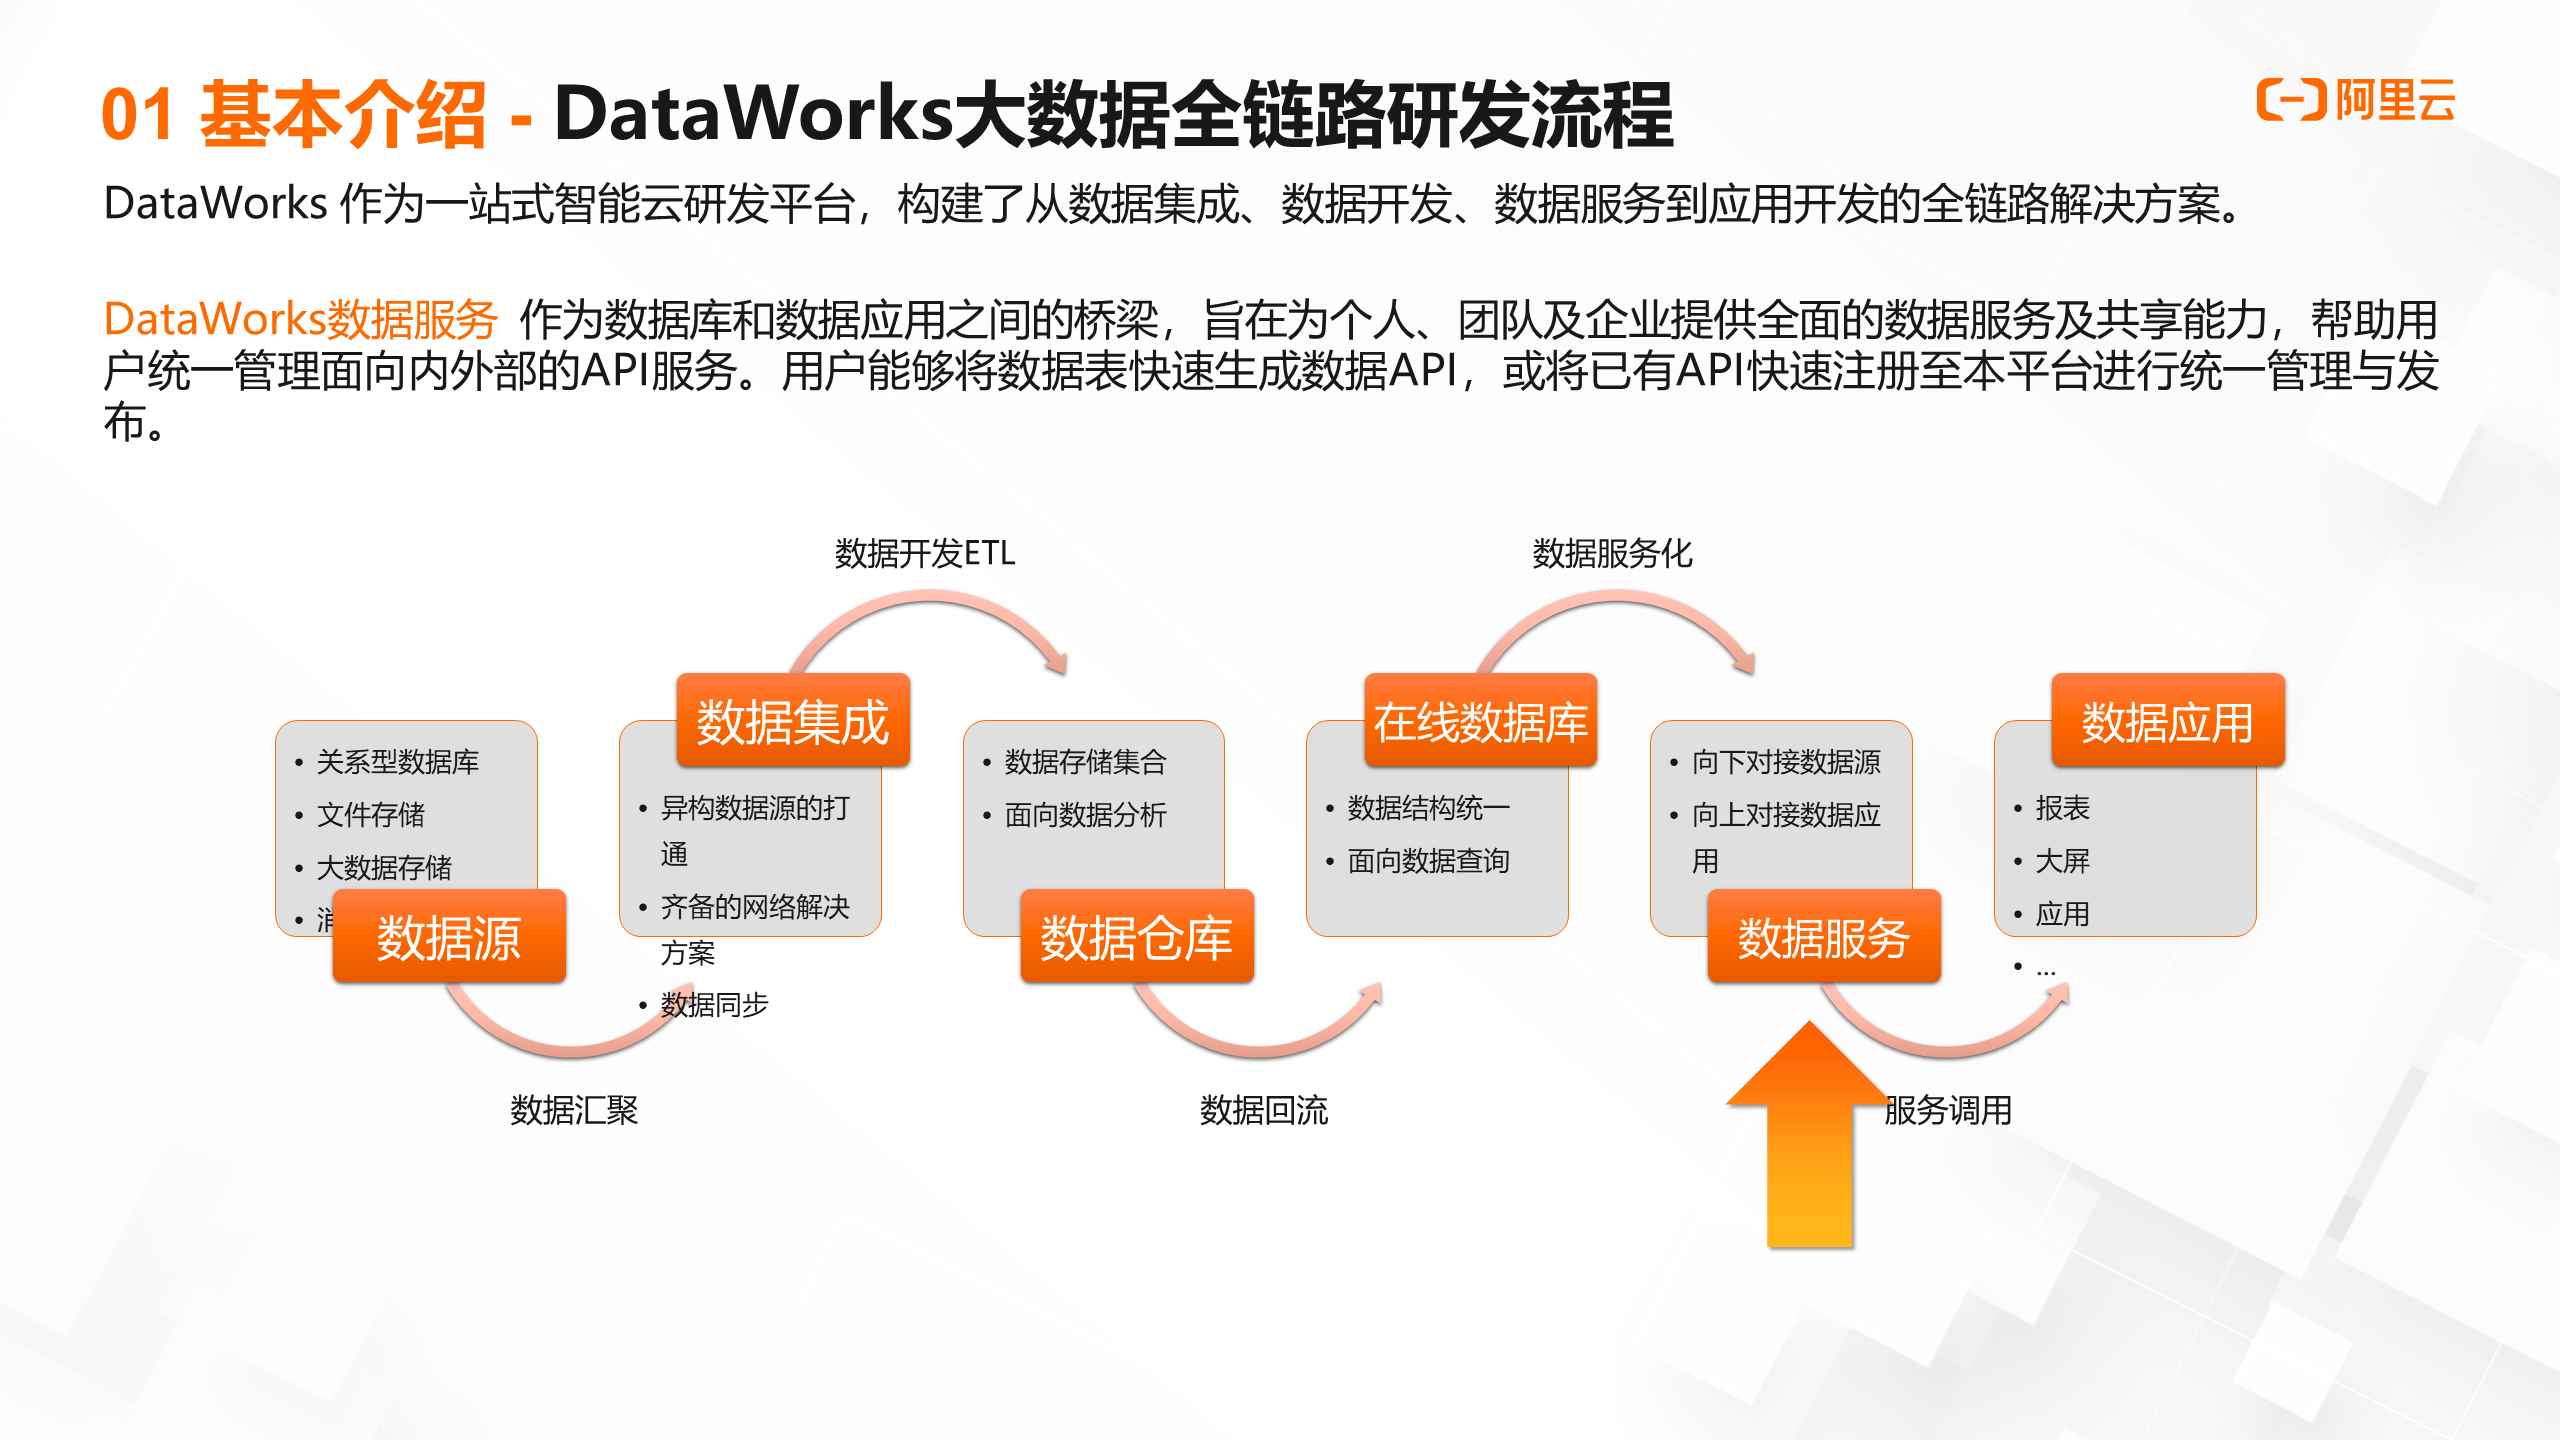 8-DataWorls-数据服务_训练营材料 .png